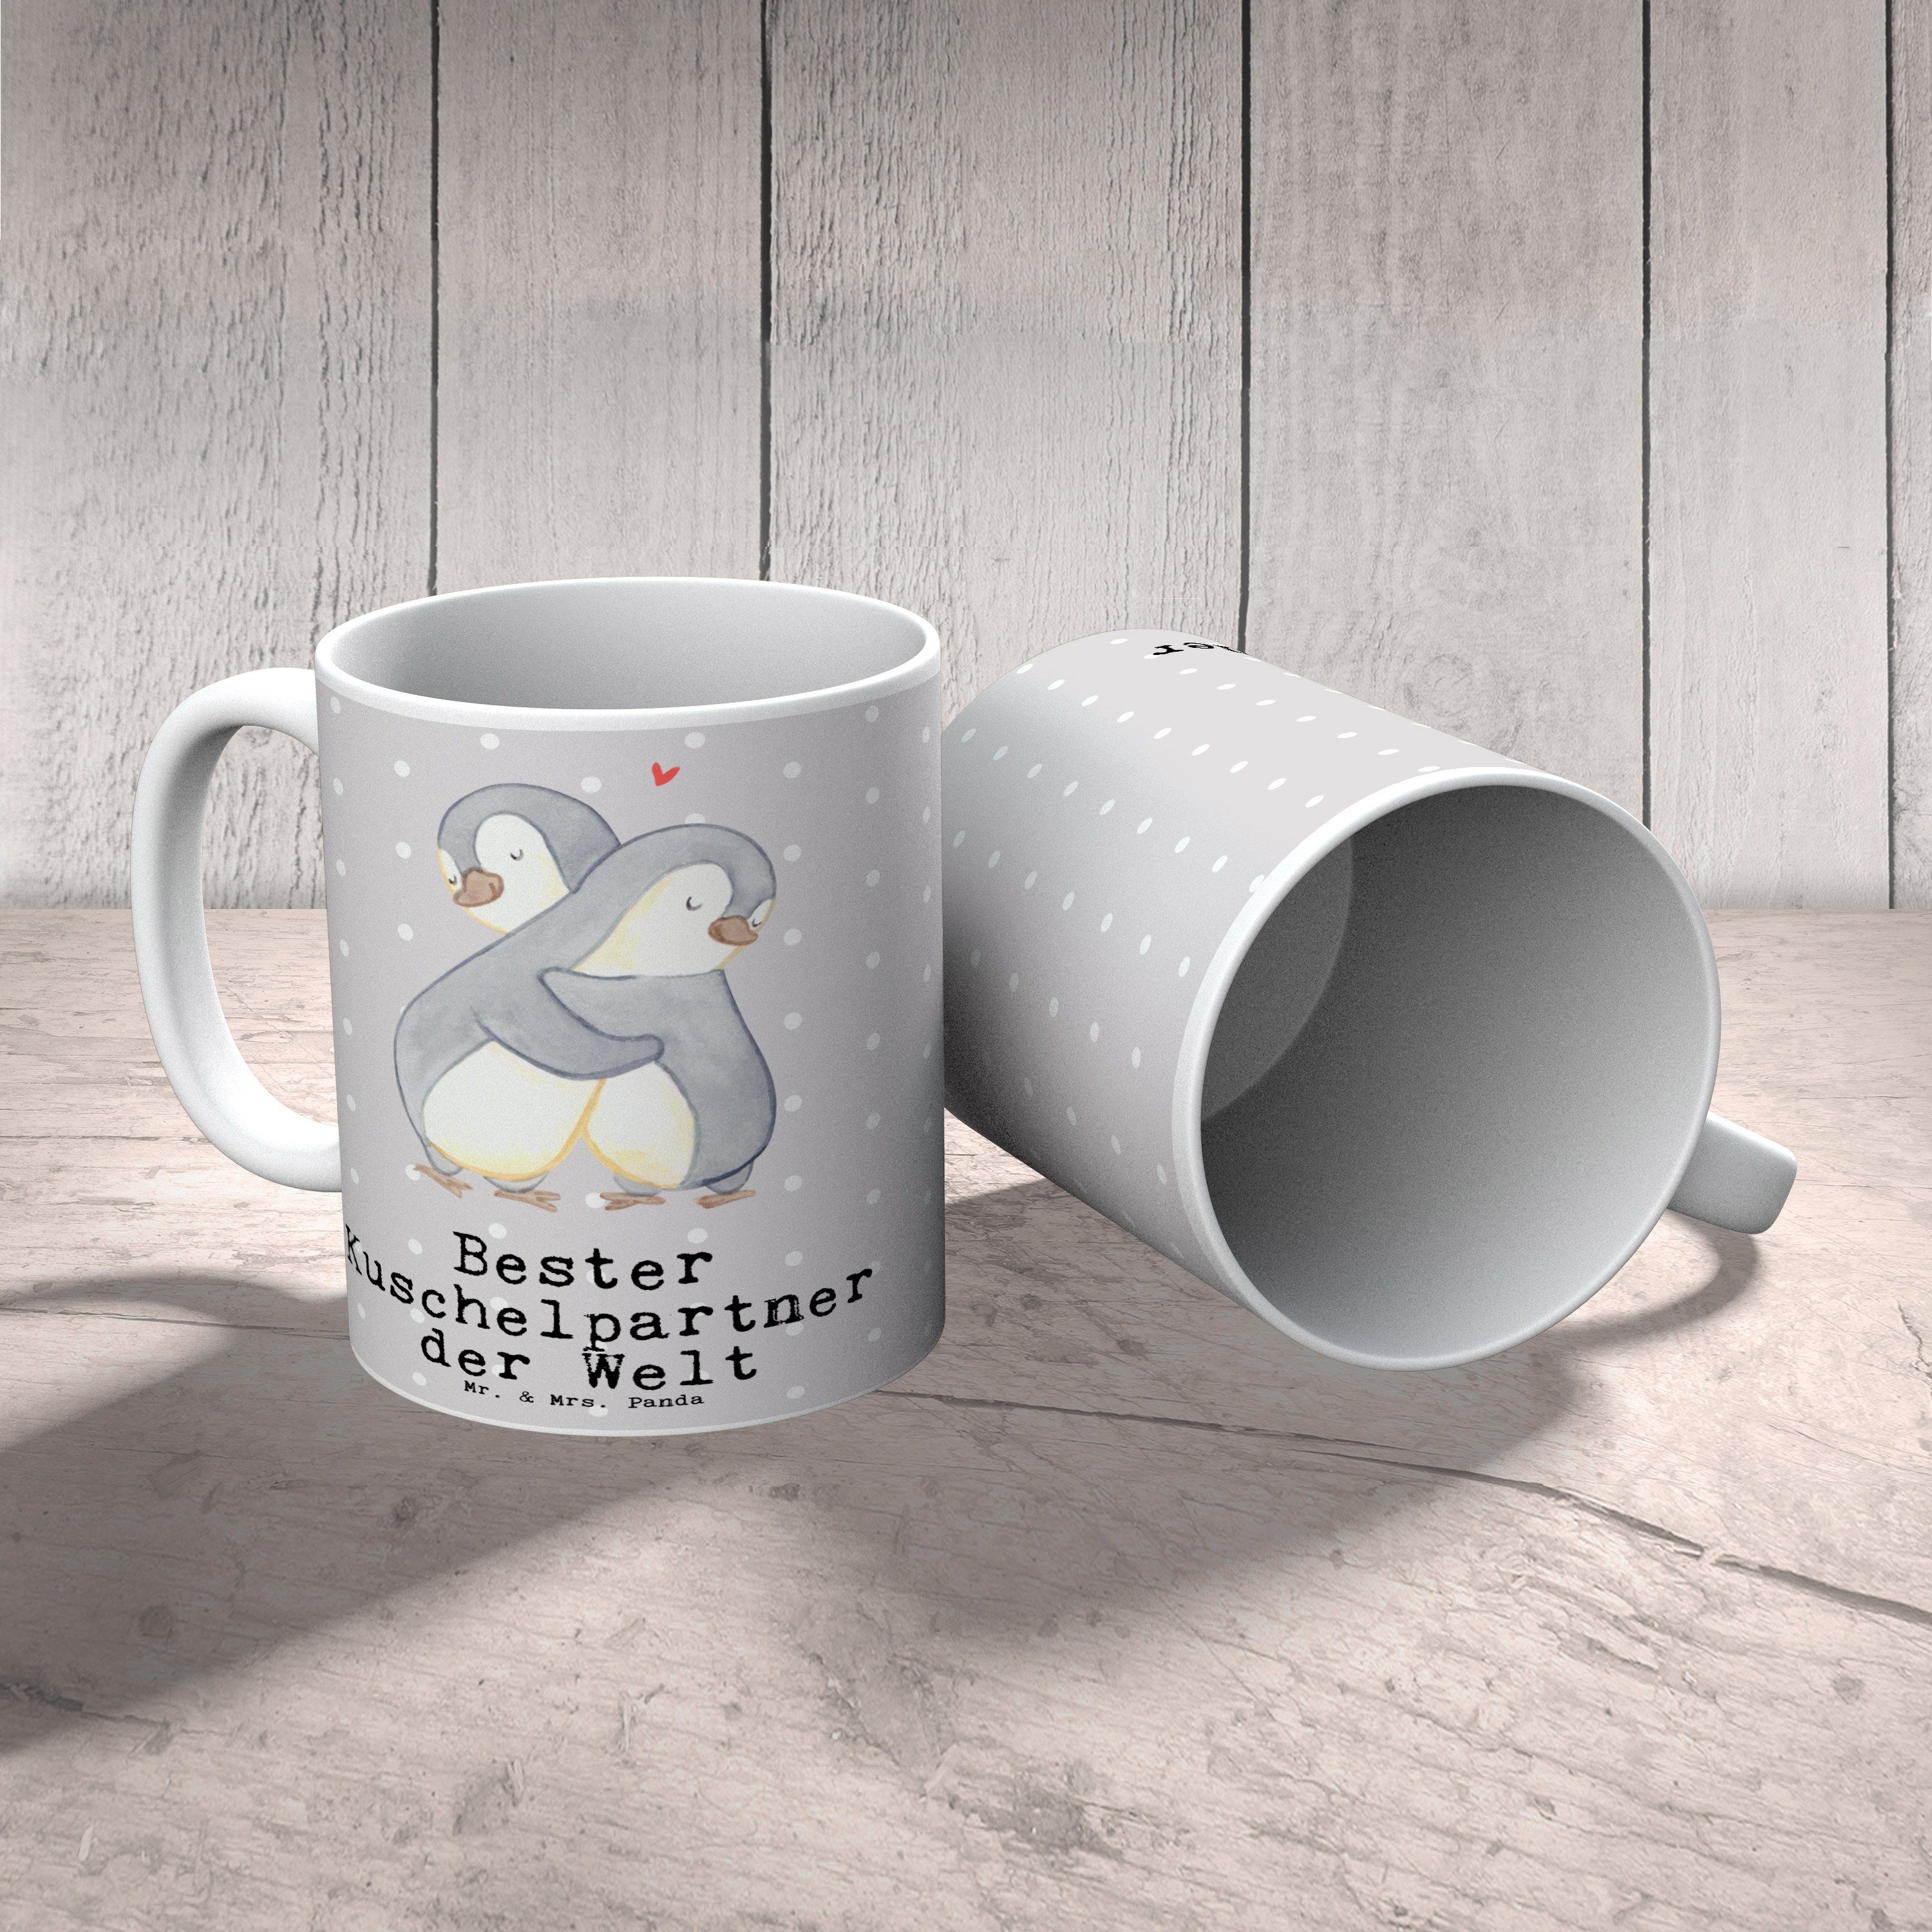 Kuschelpartner Welt der Mrs. Grau Panda - Bester - Tasse Keramik Kaf, Pinguin Mr. Pastell Geschenk, &